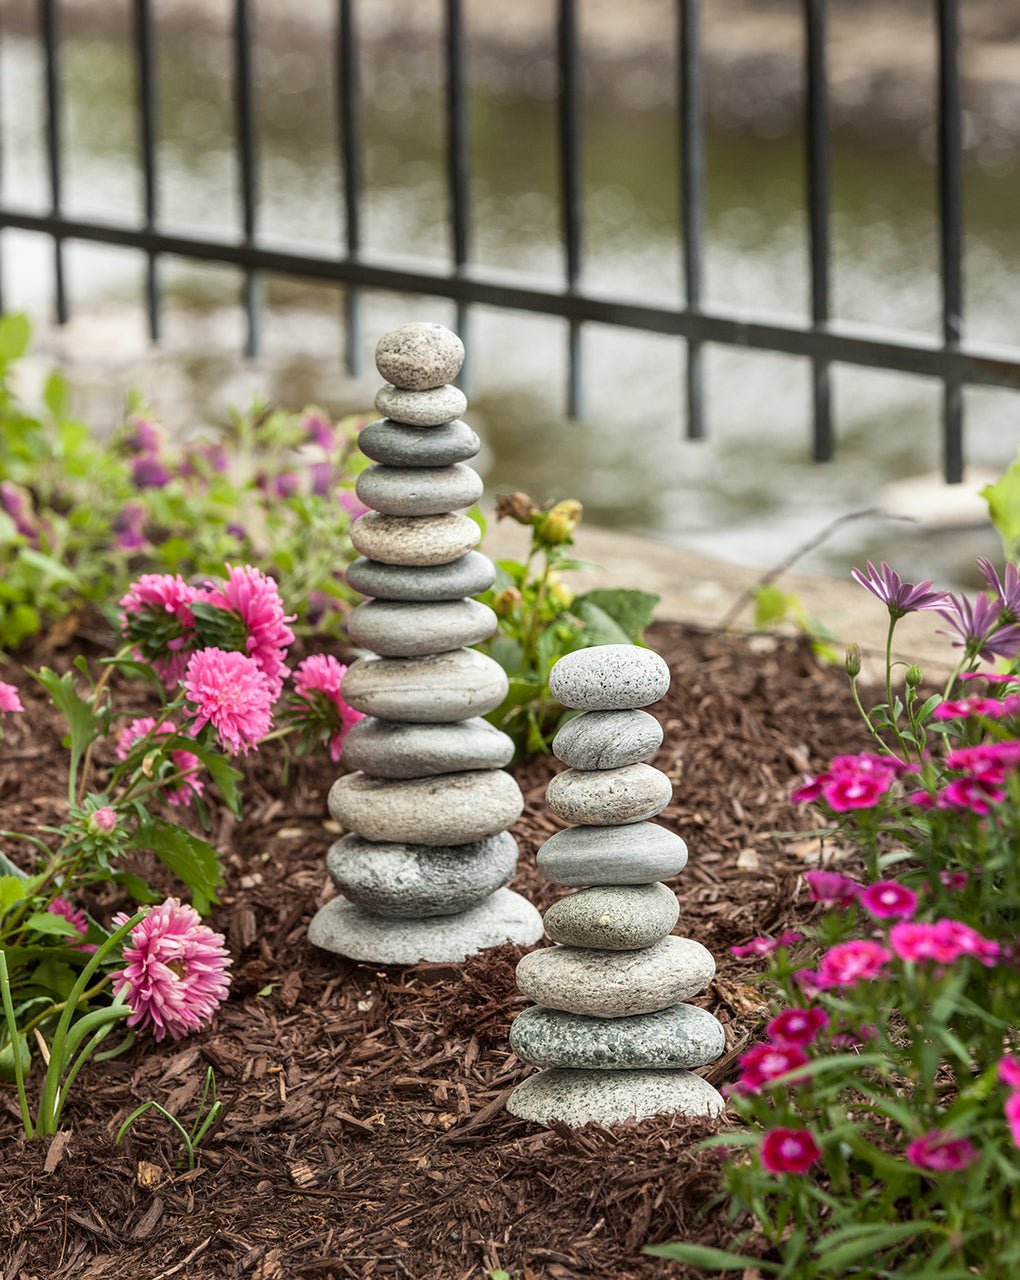  Happy Gardens Zen Stacked Rocks Sculpture  Cairn Statue  Balancing Rock Stone Decor for Japanese Garden : Patio, Lawn & Garden